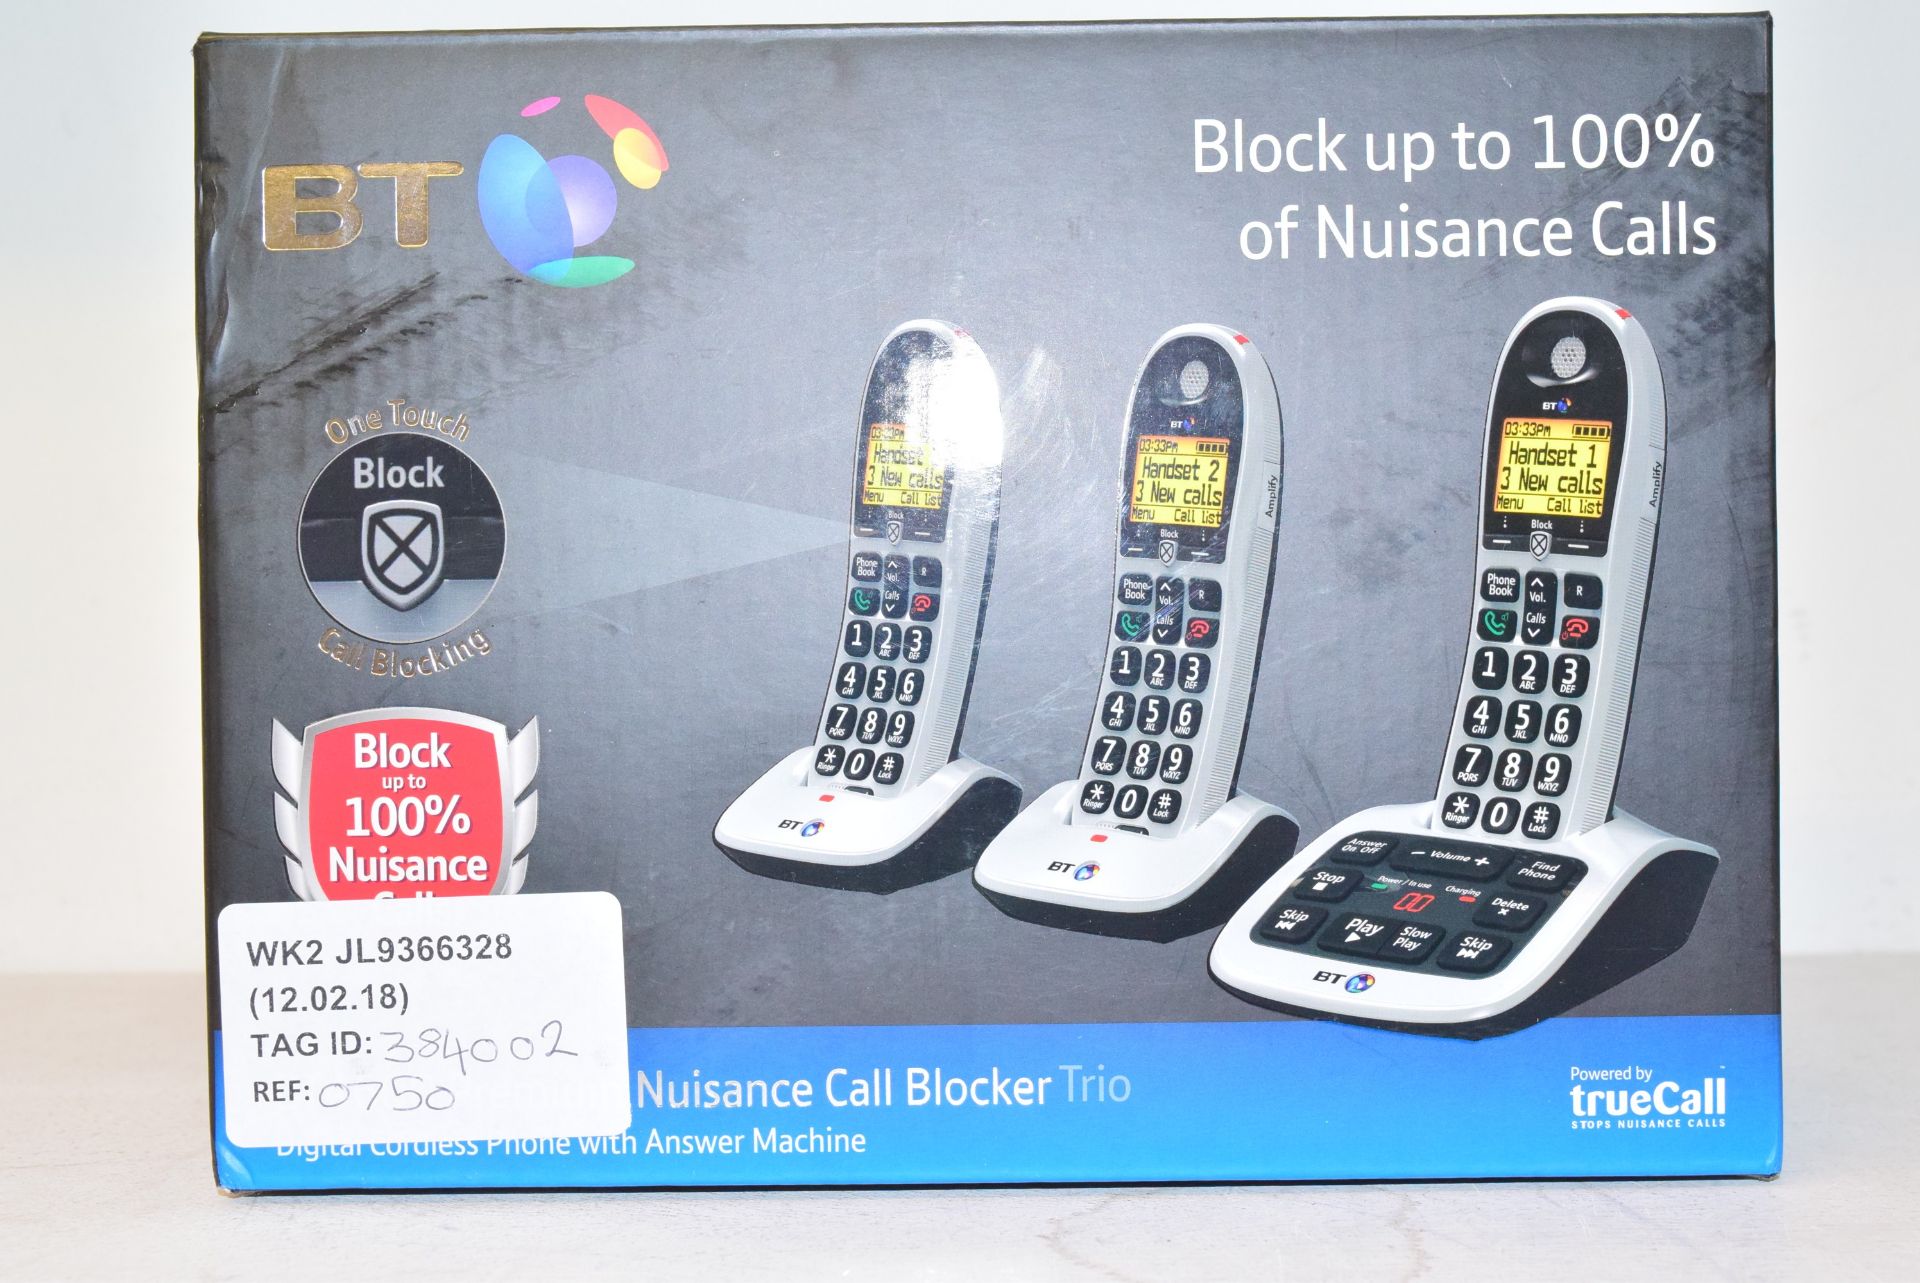 1 X BOXED BT PREMIUM NUISANCE CALL BLOCKER TRIO PHONE RRP £75 12.02.18 384002 W1010